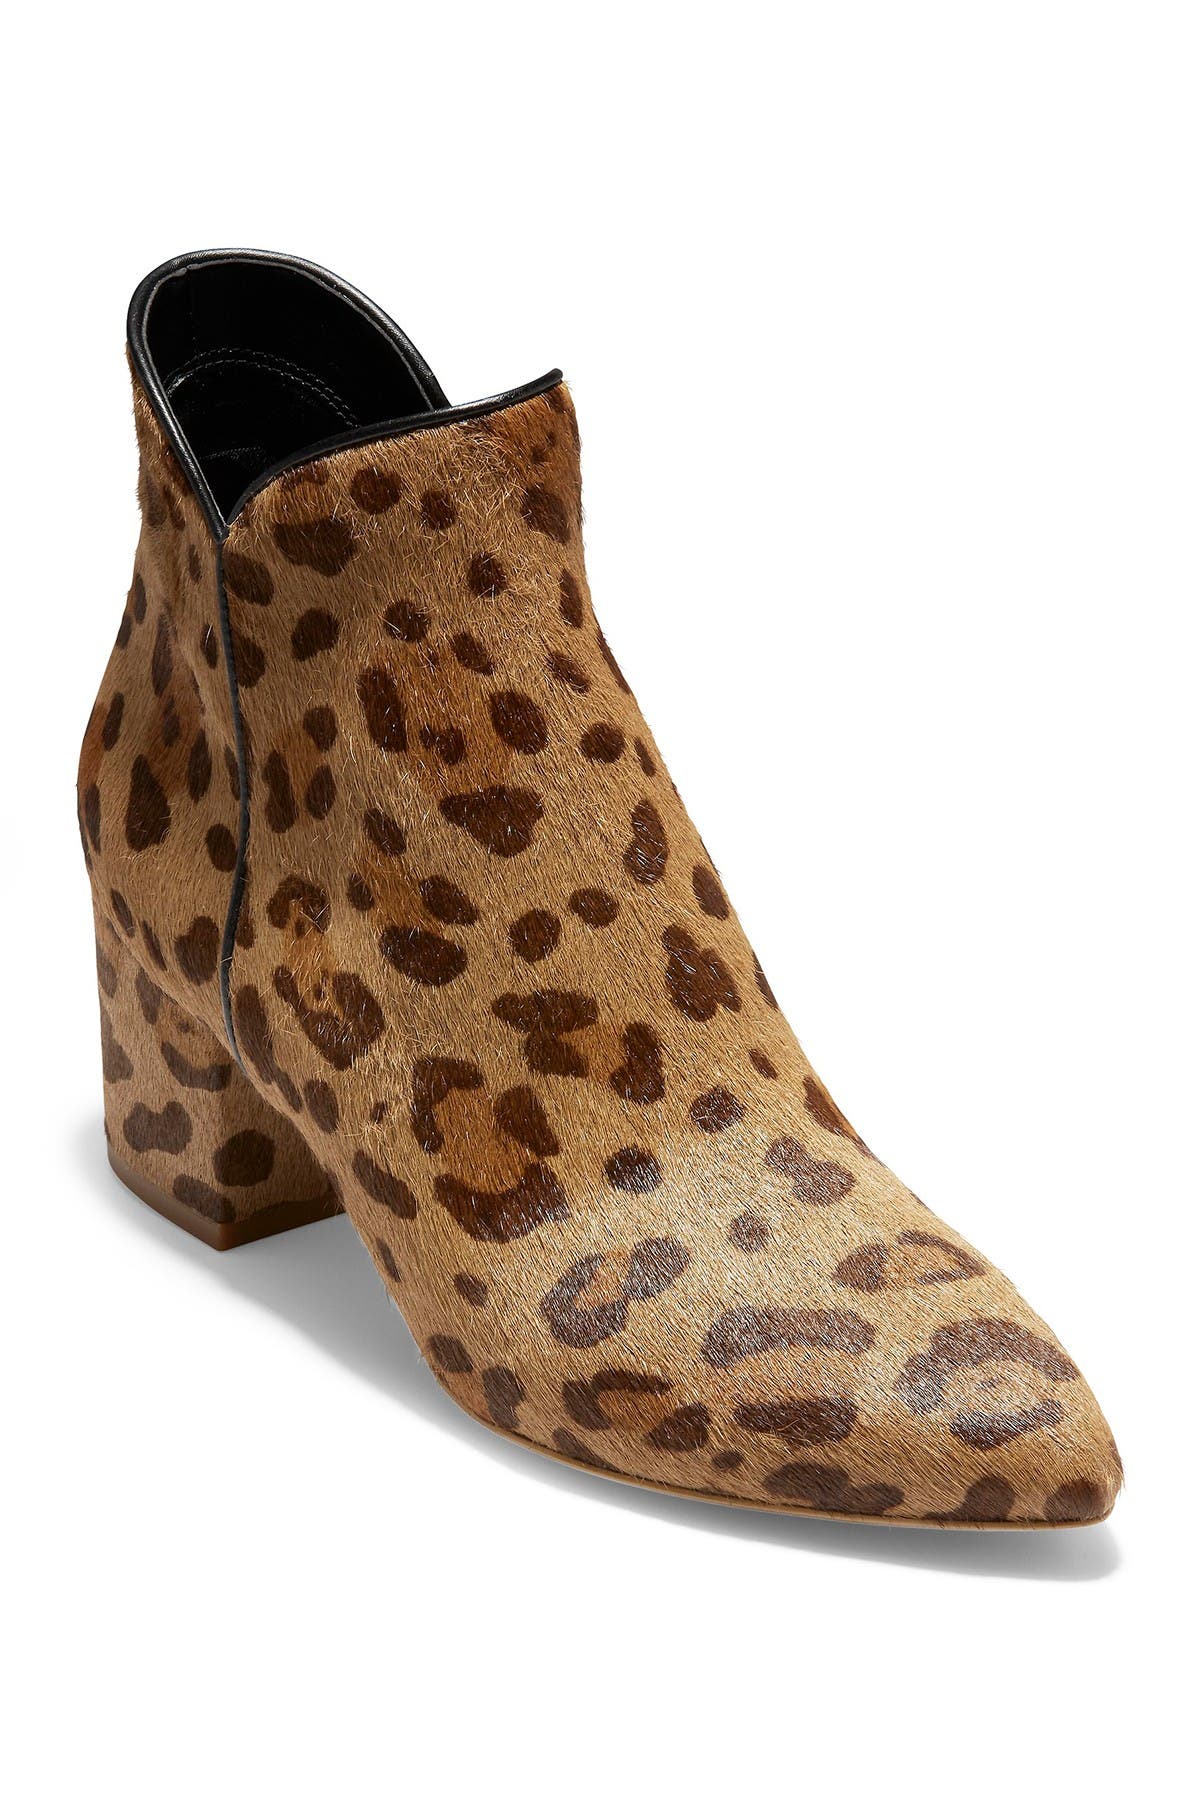 leopard booties wide width